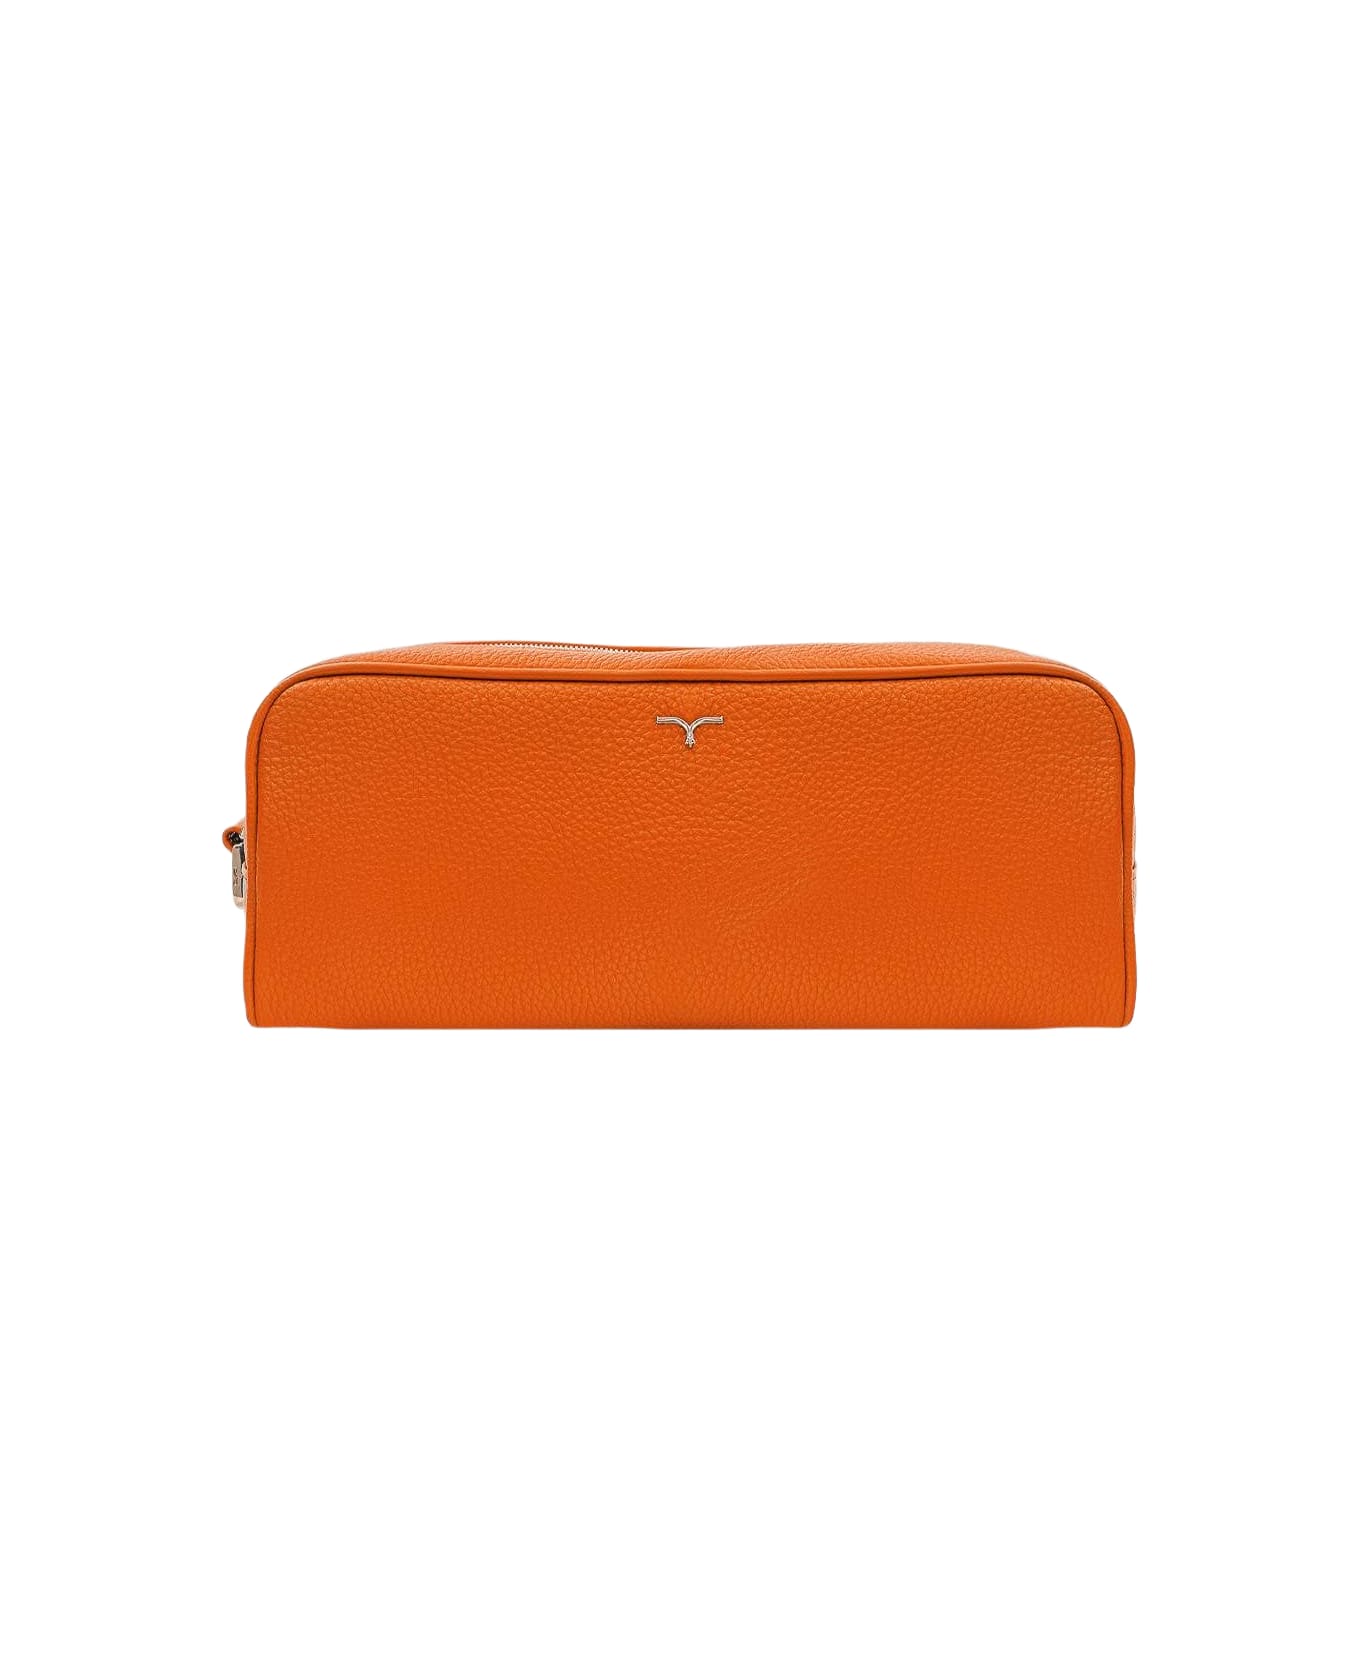 Larusmiani Wash Bag 'tzar' Luggage - Orange トラベルバッグ